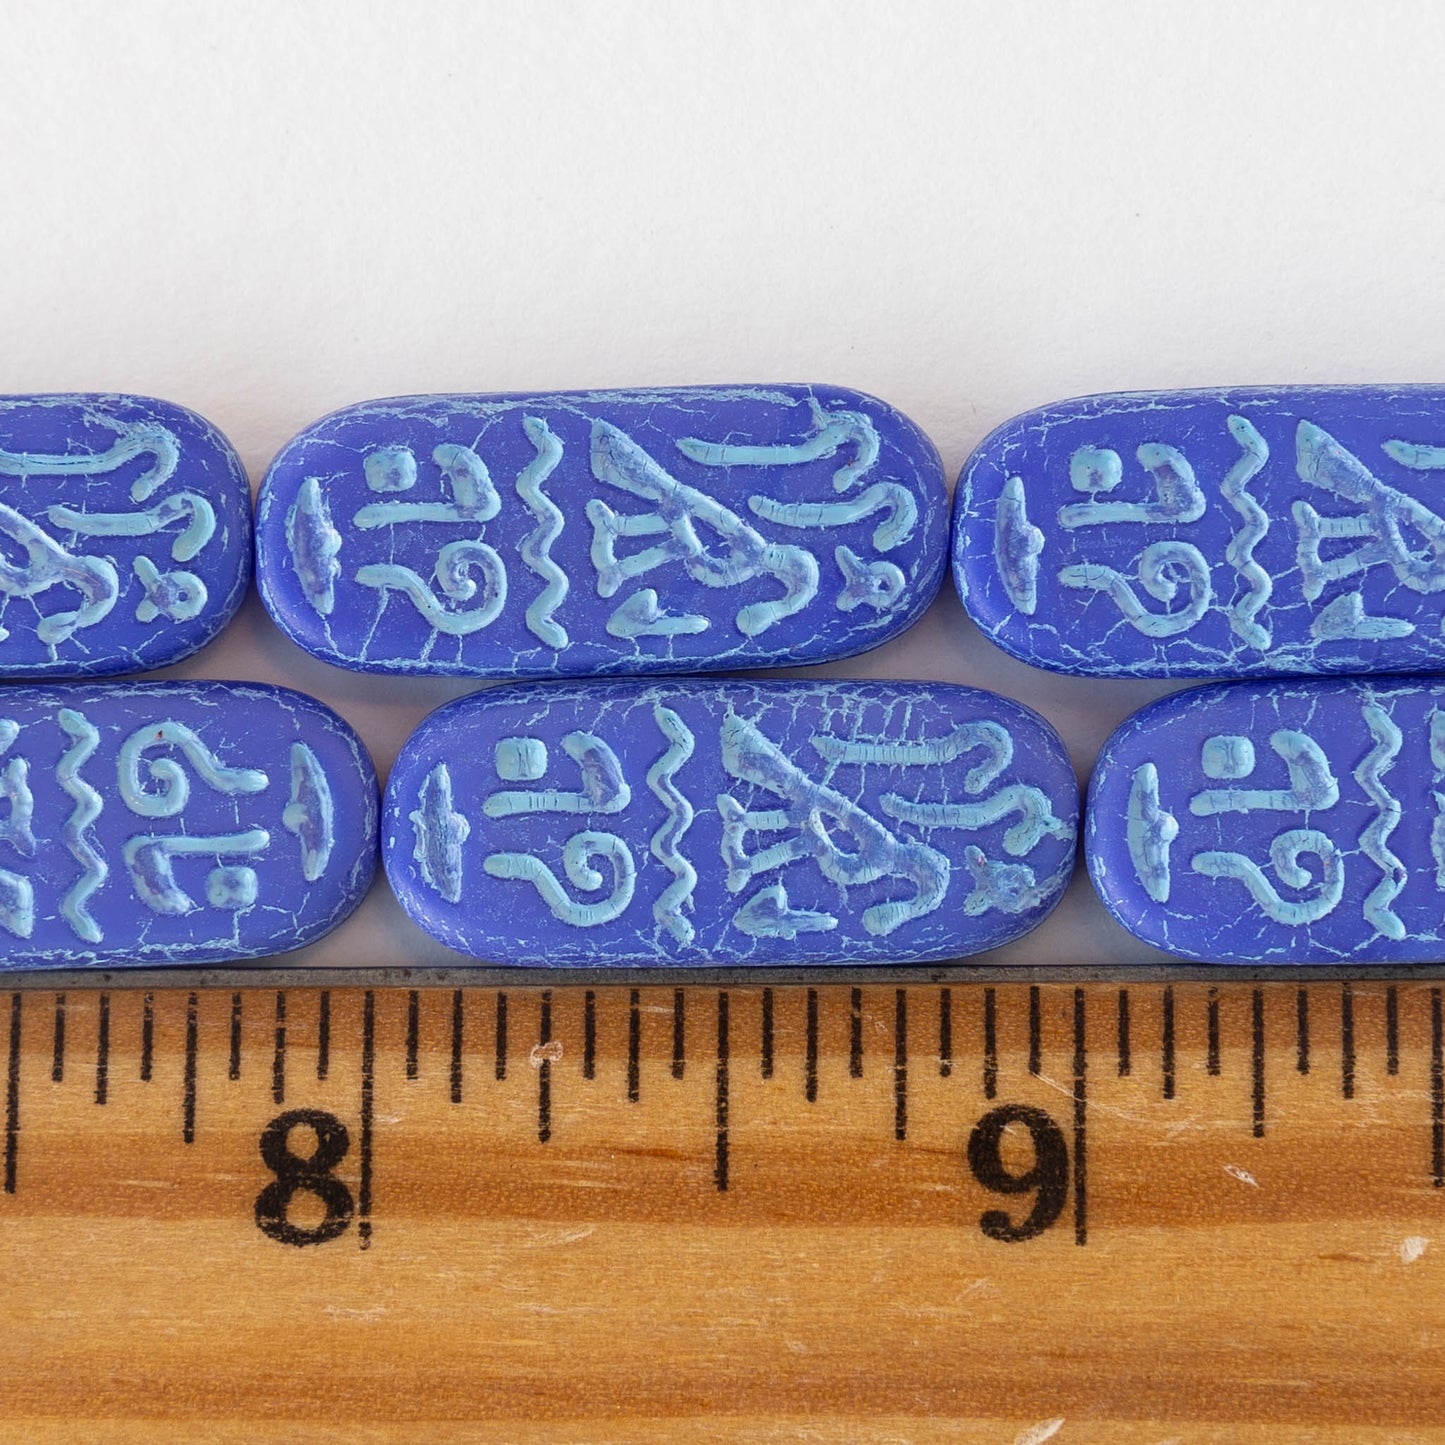 10x25mm Cartouche Beads - Lapis Blue Opaque Matte with Aqua Wash  - 4